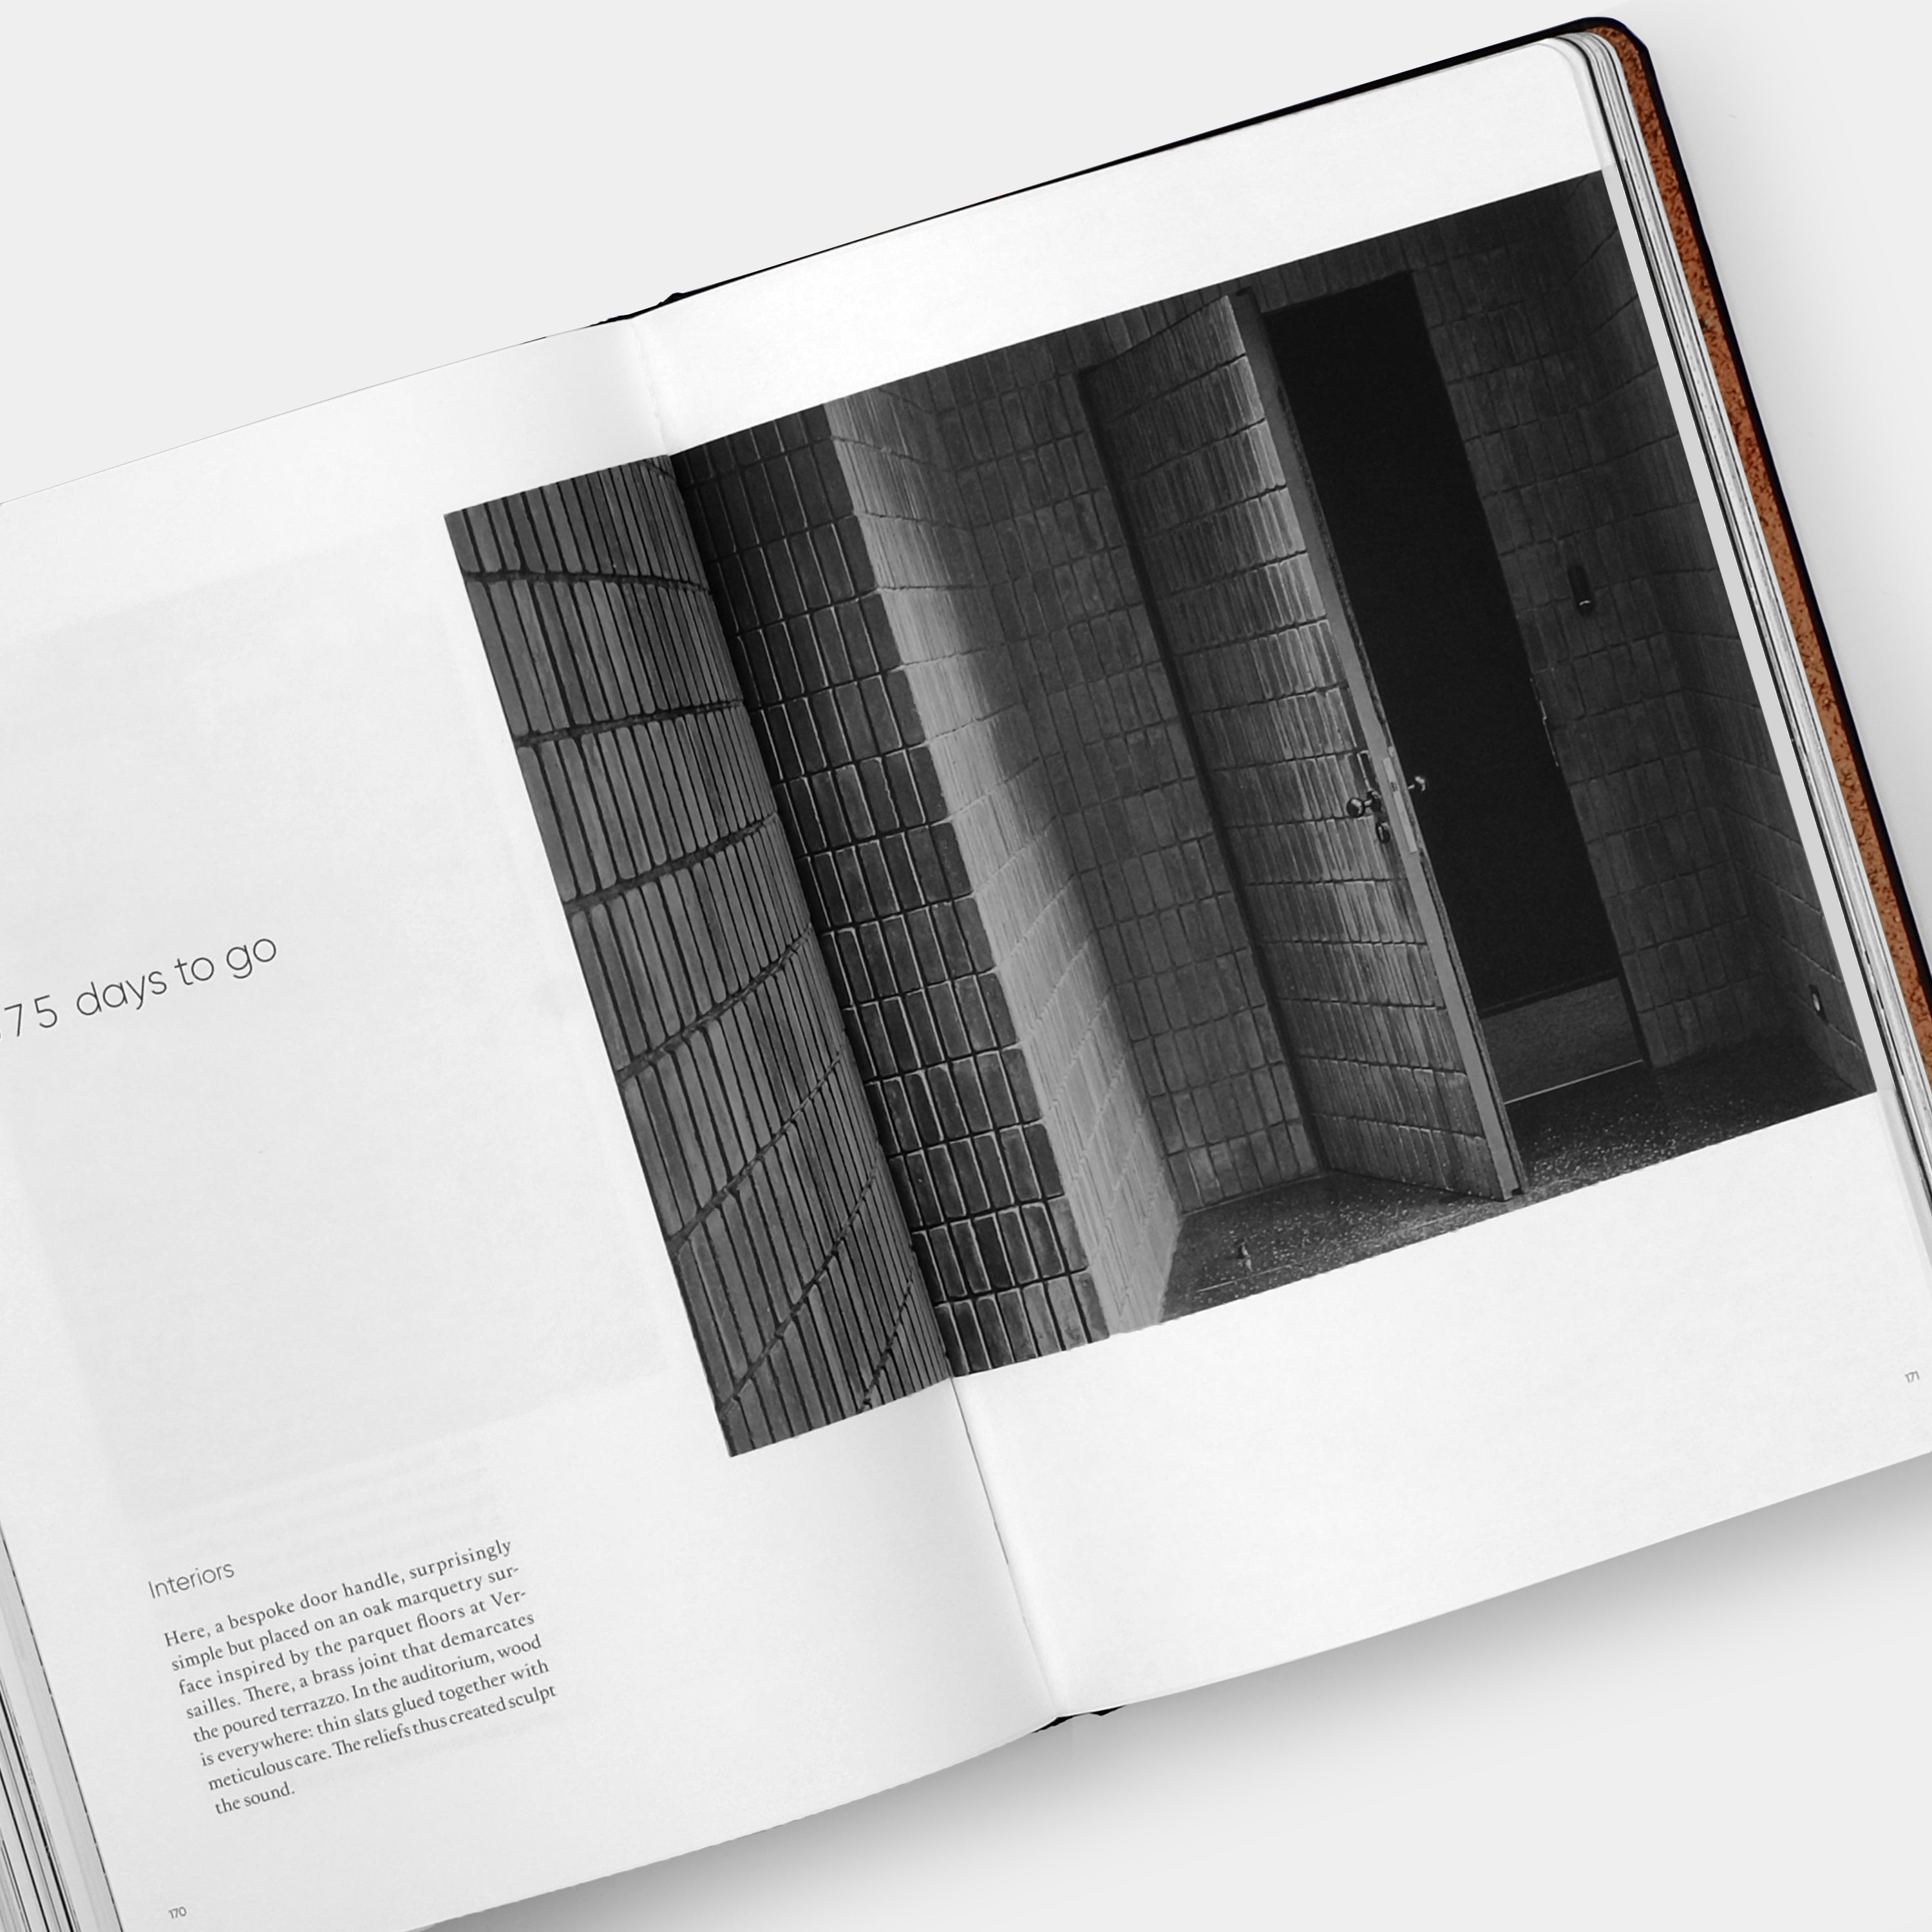 Yves Saint Laurent Museum Marrakech by Studio KO Phaidon Book